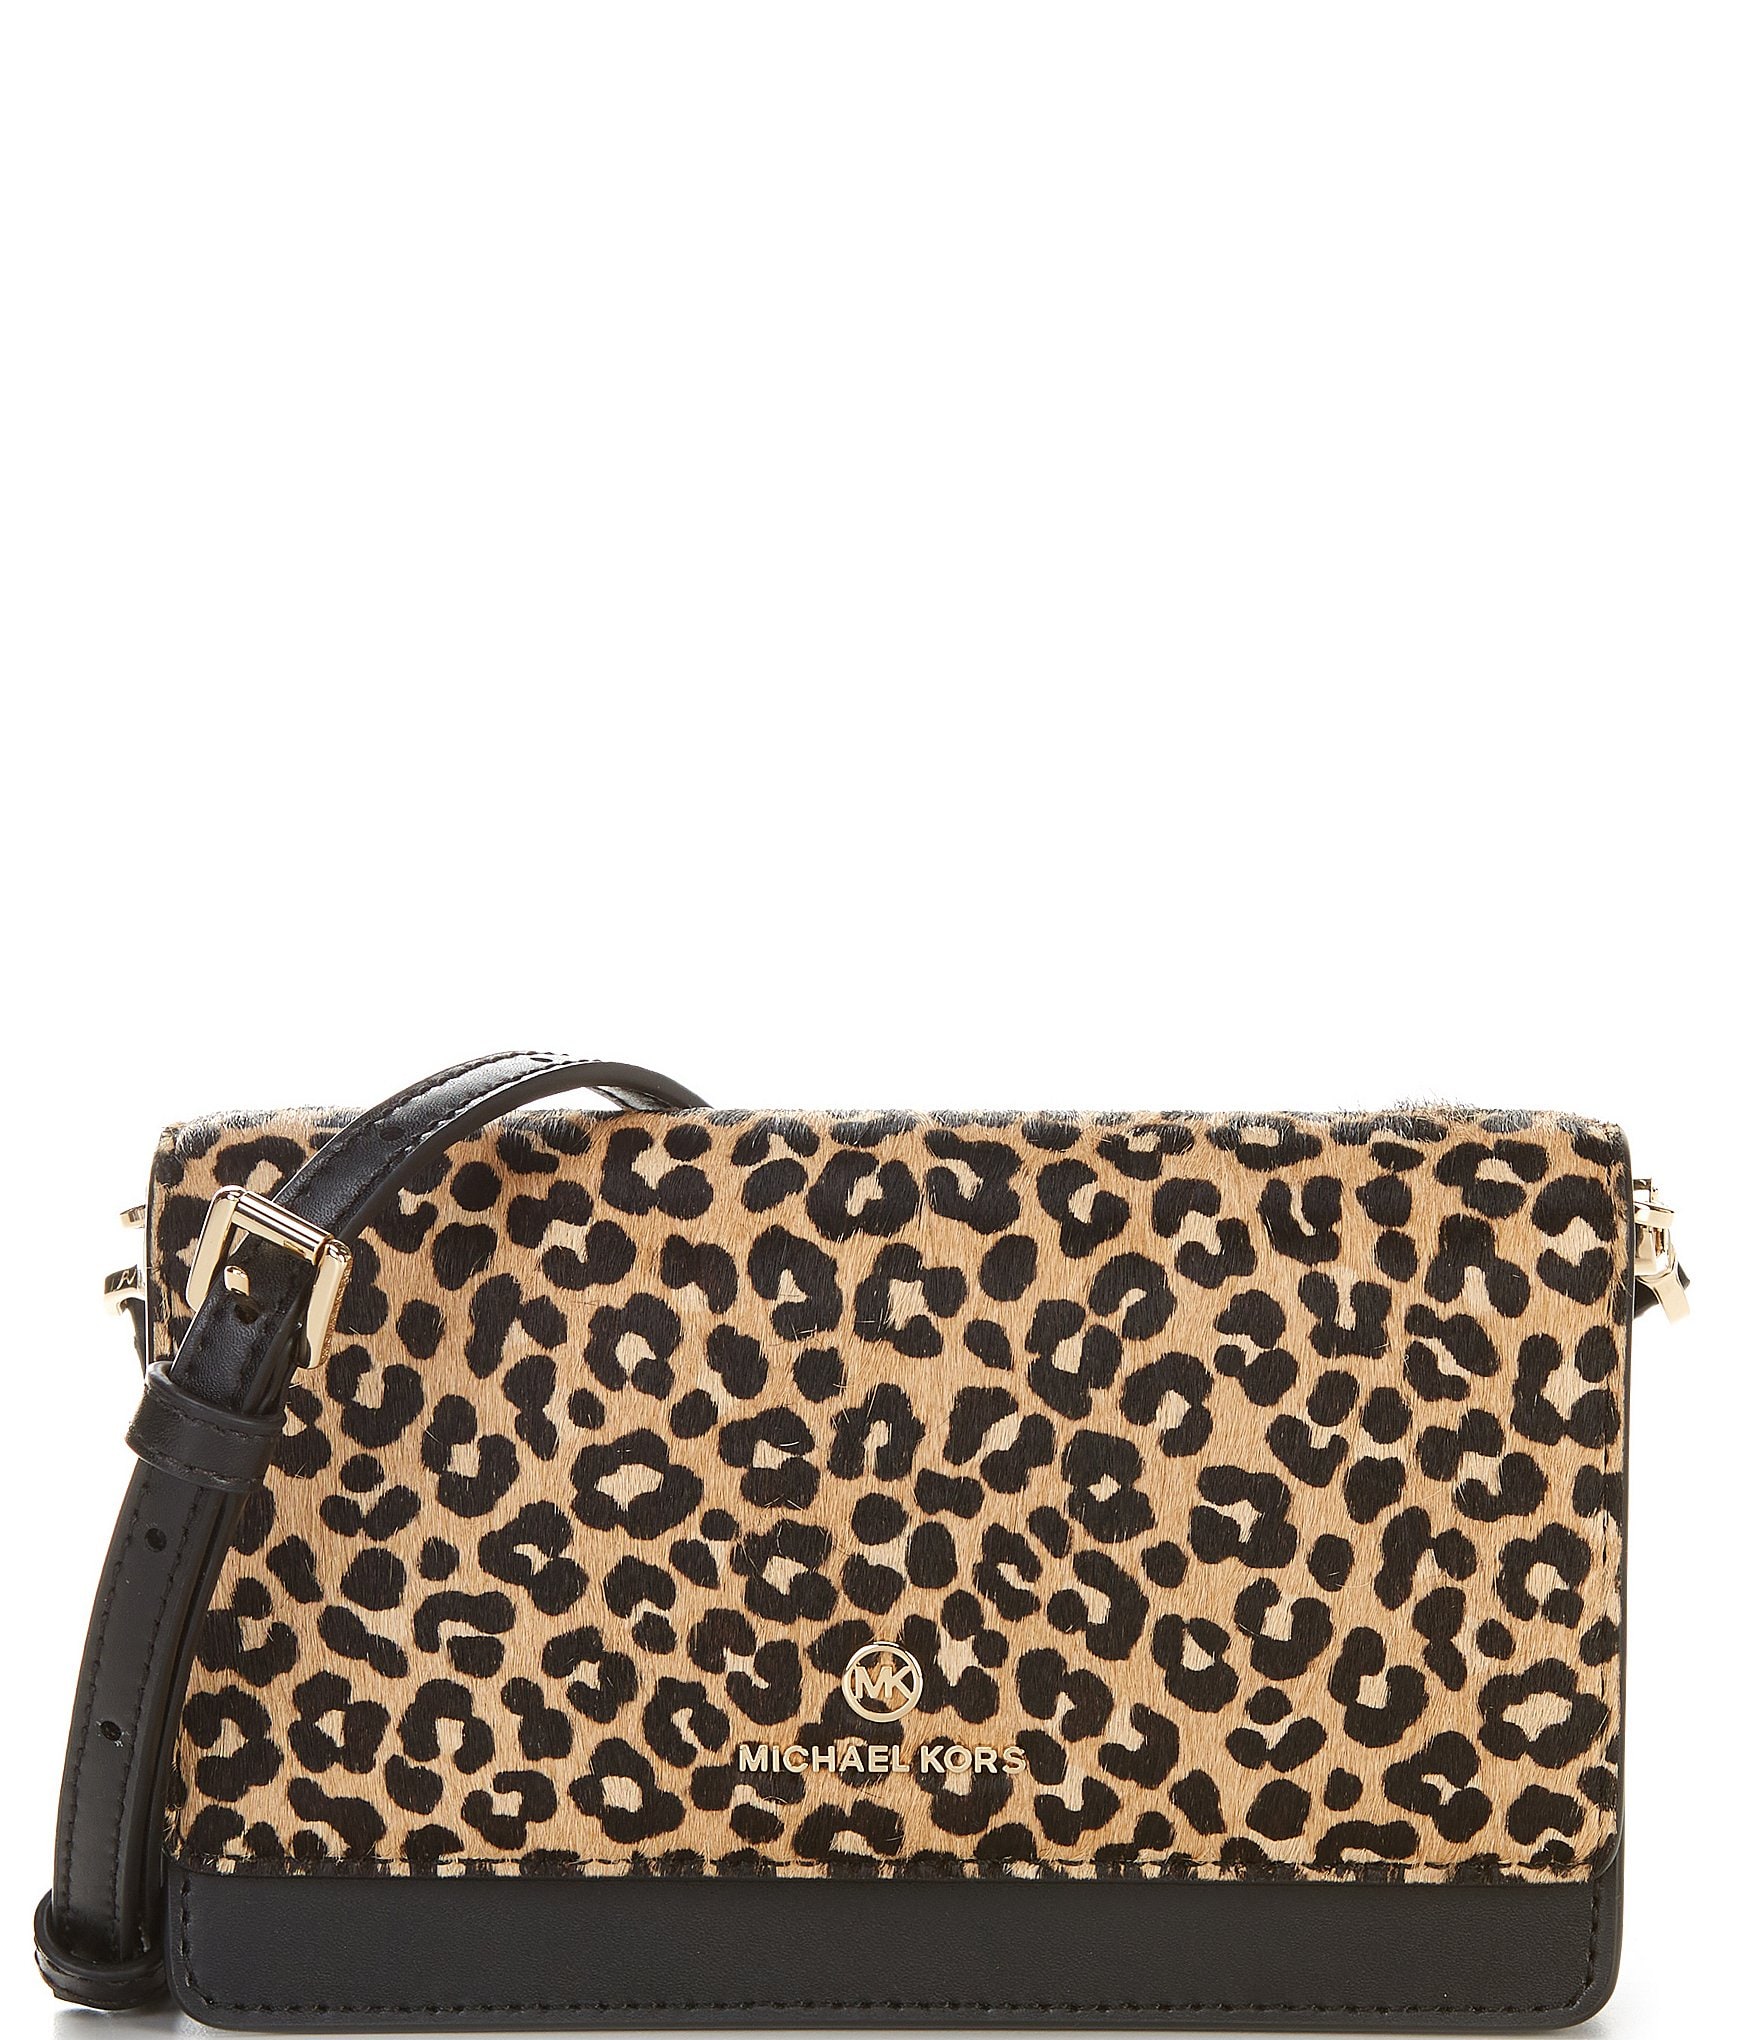 Michael kors zip top mini purse - clothing & accessories - by owner -  apparel sale - craigslist